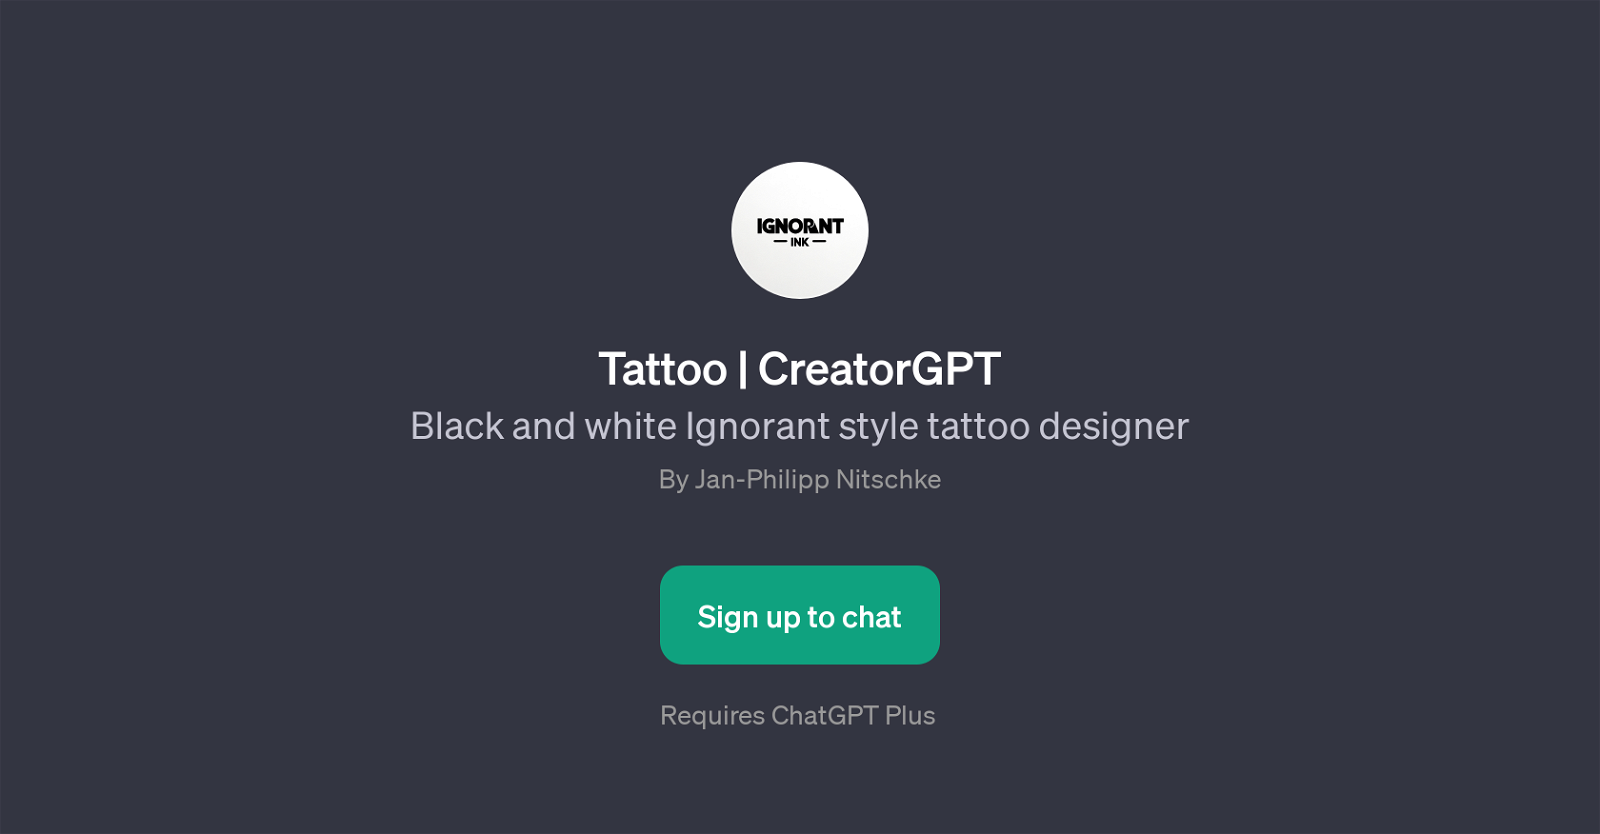 Tattoo | CreatorGPT website